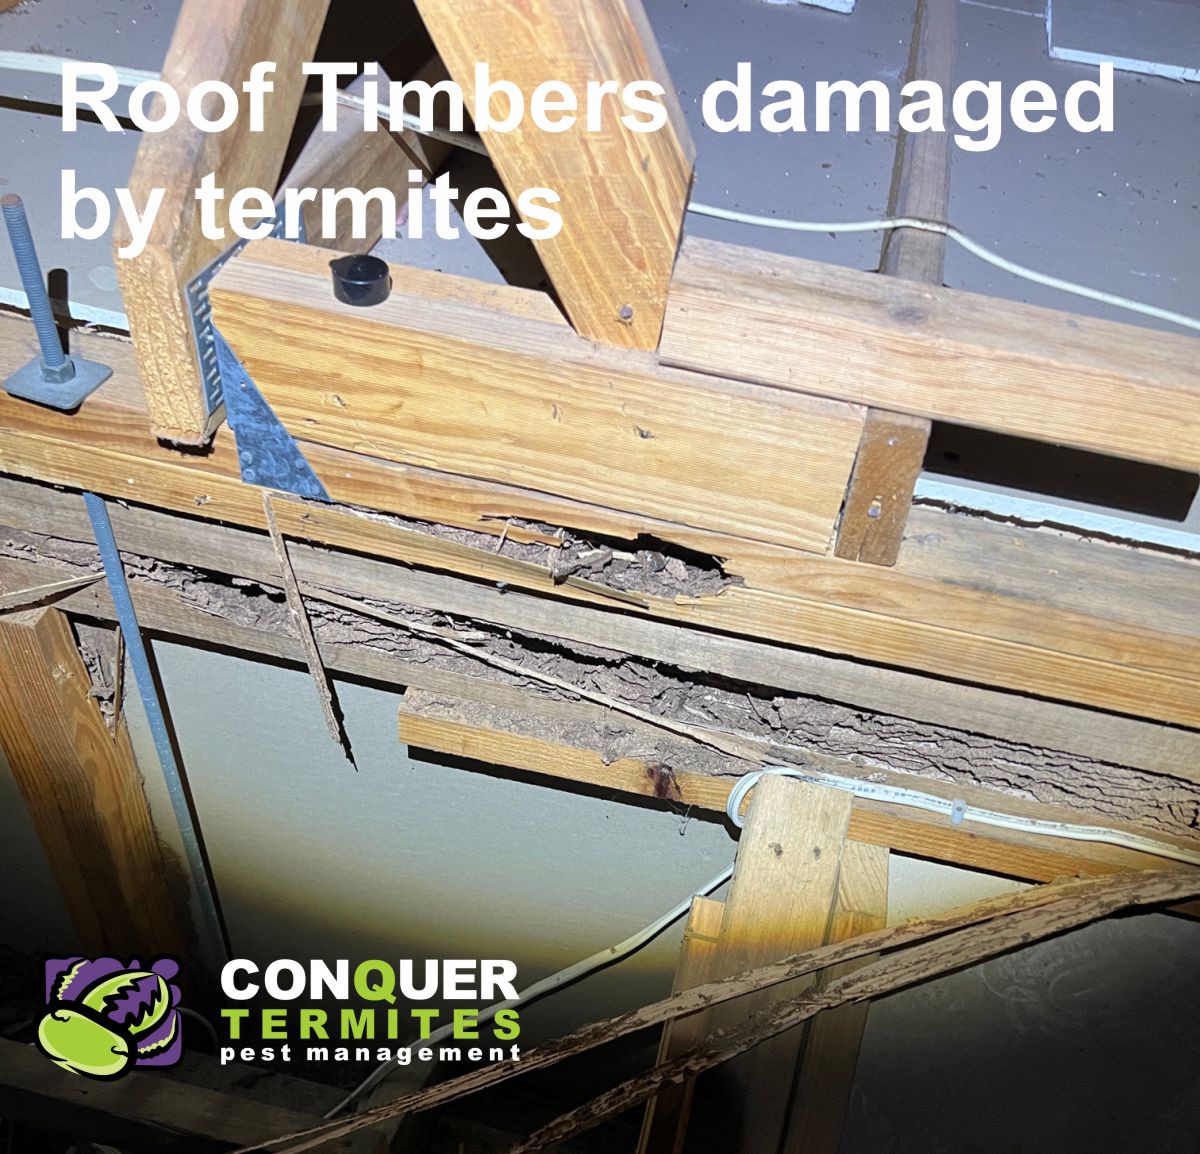 Termites eating roof timbers - Brisbane